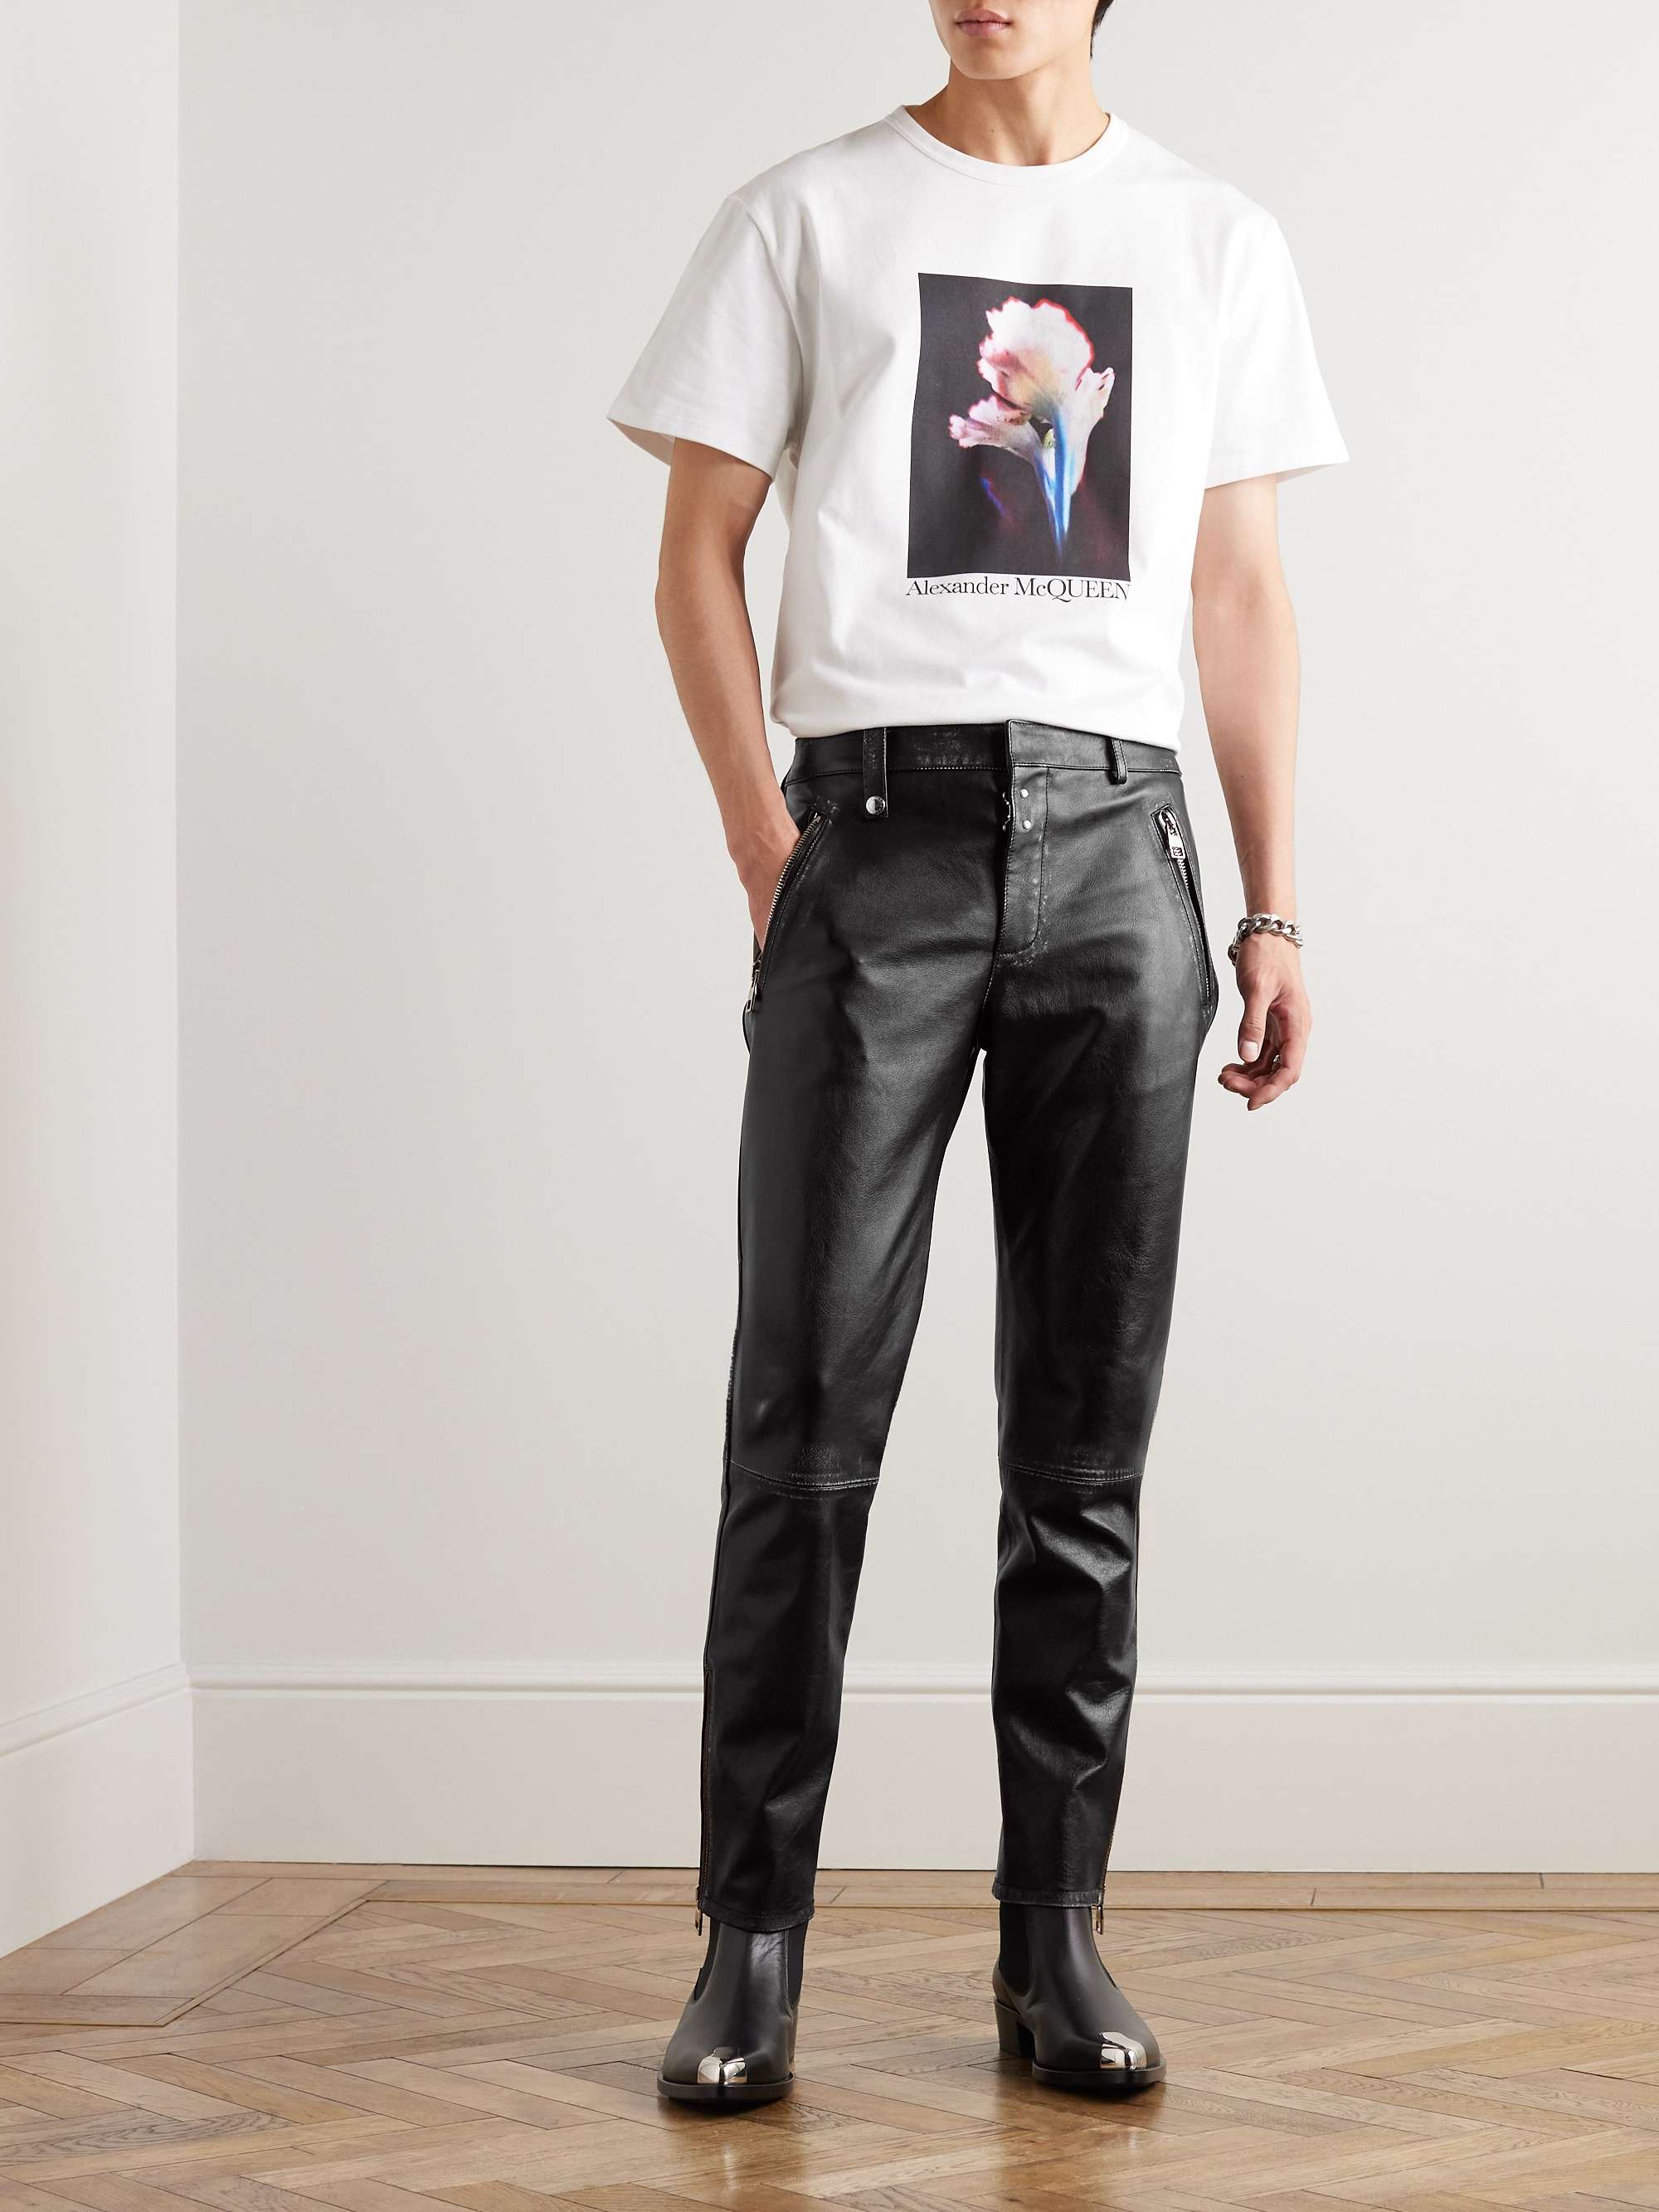 ALEXANDER MCQUEEN Slim-Fit Zip-Detailed Leather Trousers for Men | MR PORTER